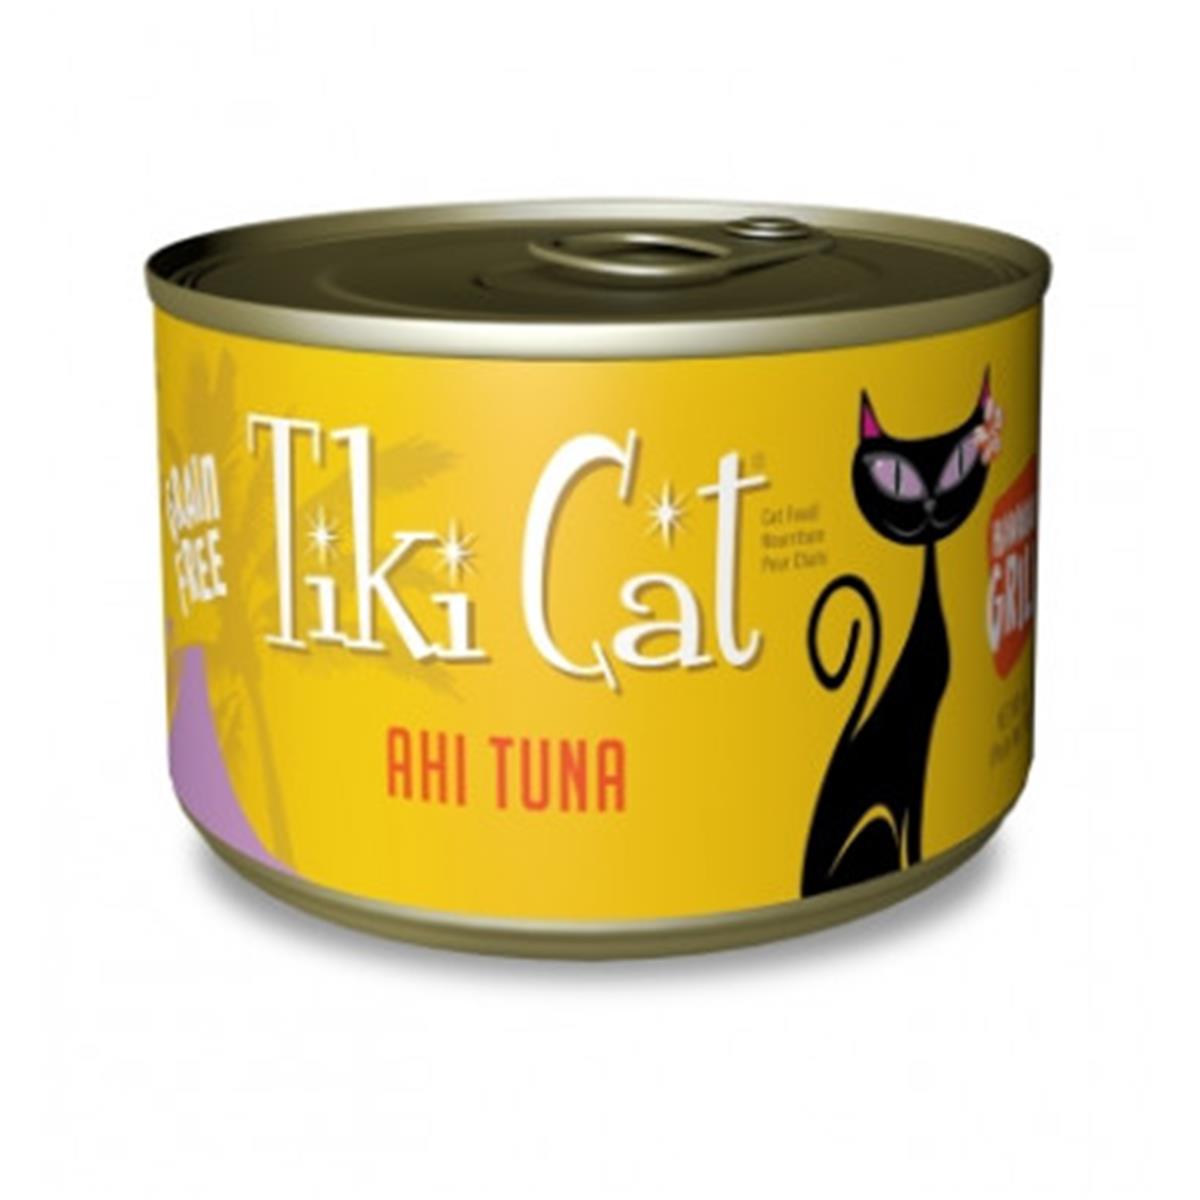 Tk10745 Tiki Cat Hawaiian Grill Ahi Tuna Gourmet Cat Food - 6 Oz - Case Of 8